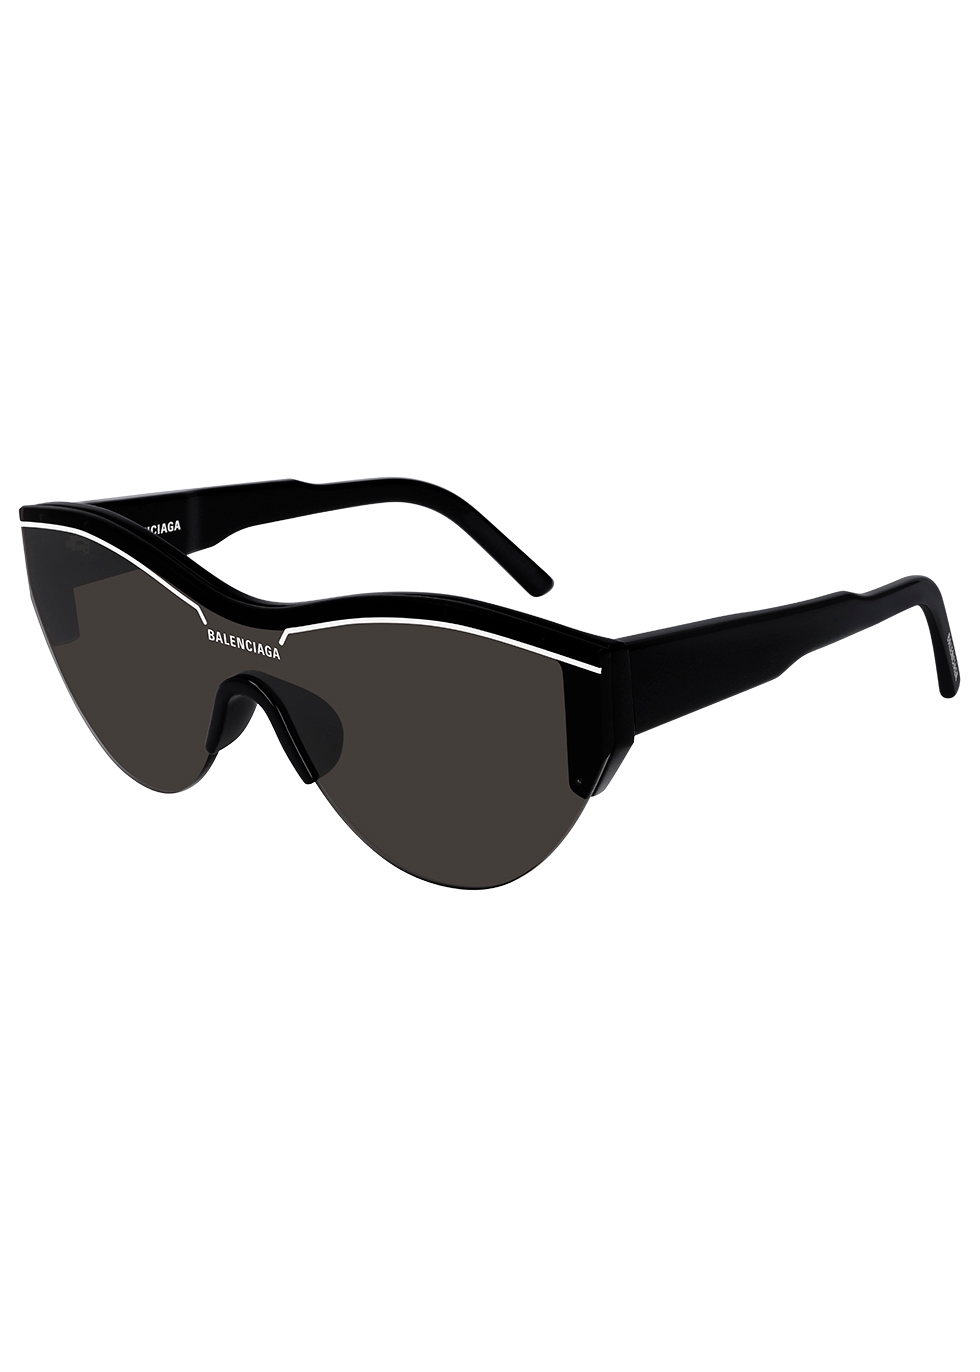 Balenciaga Black oval-frame sunglasses - Harvey Nichols